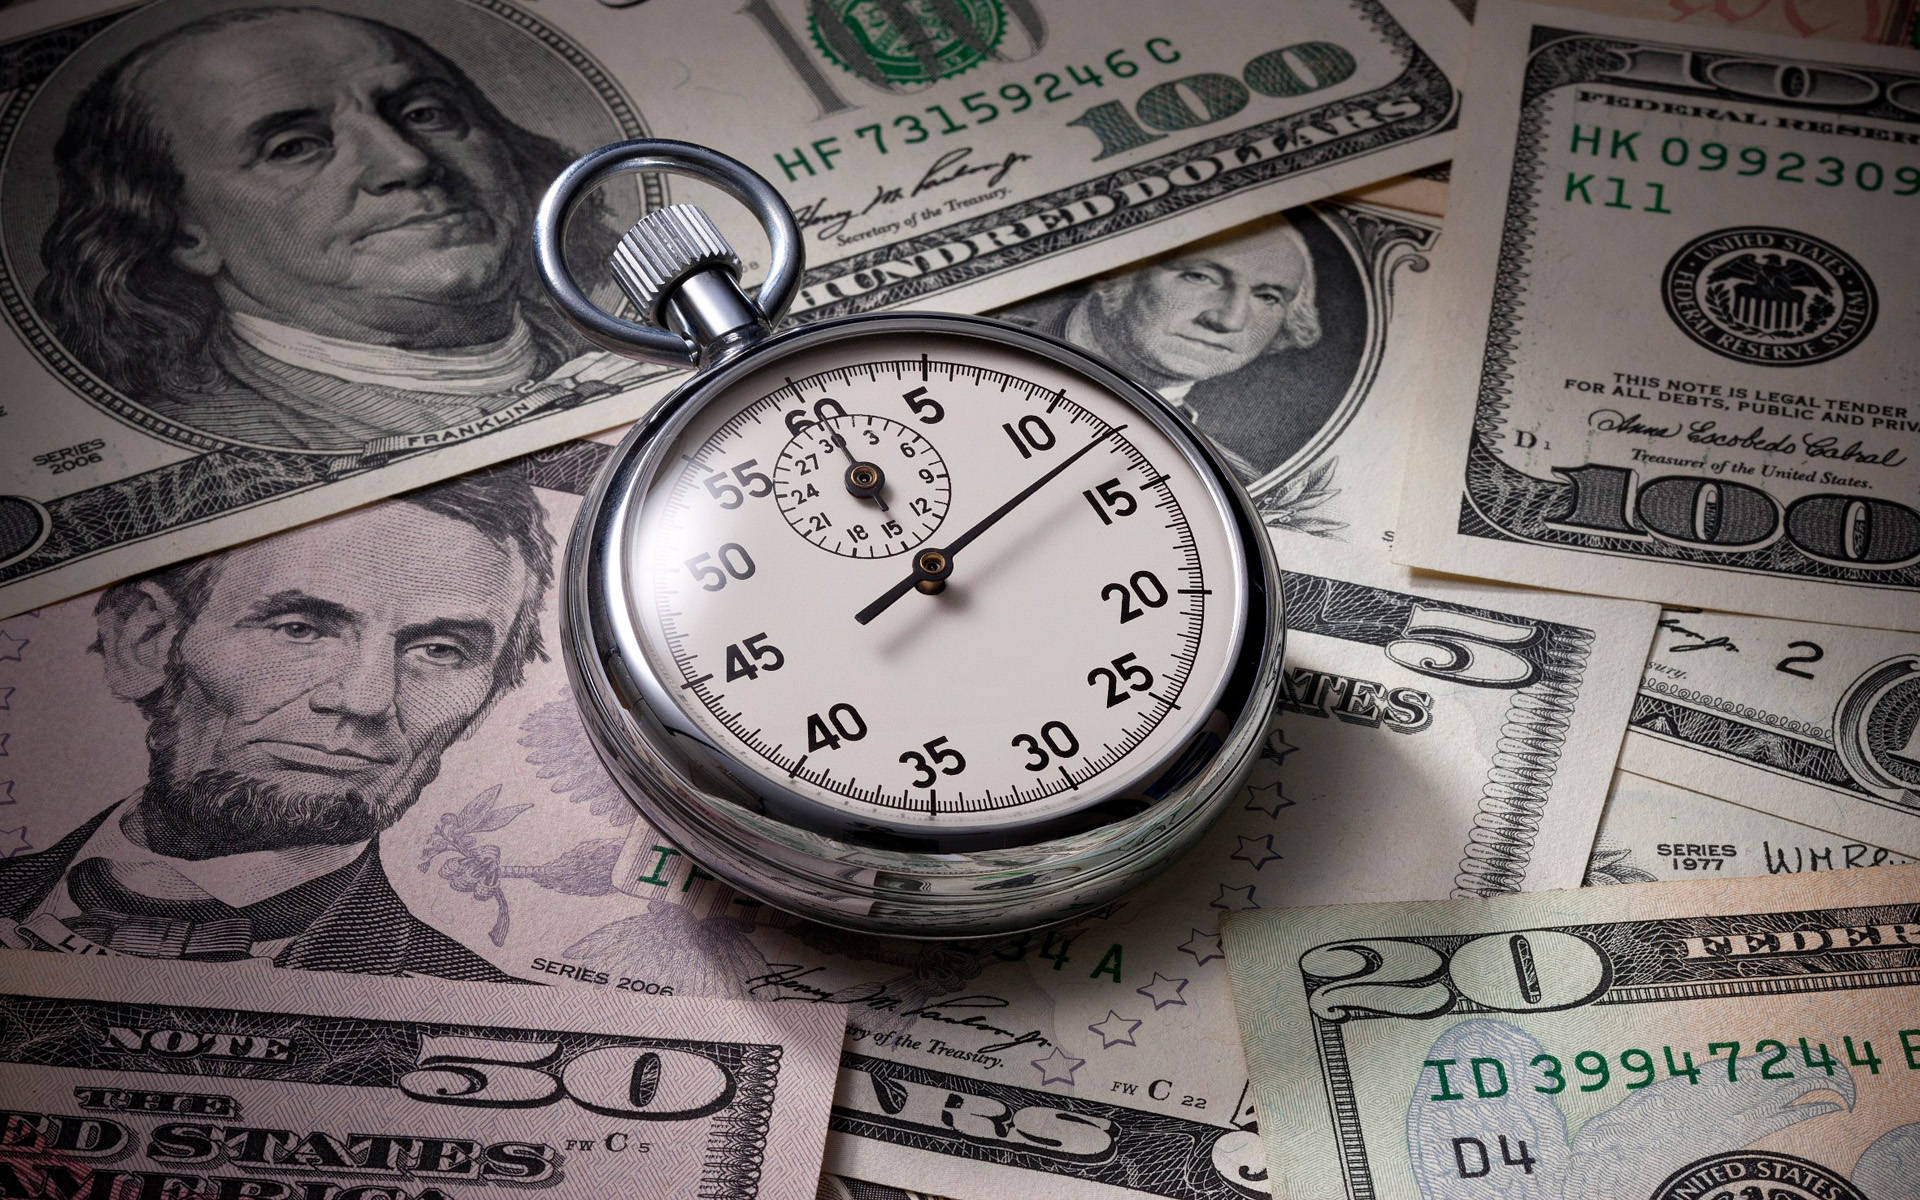 Time Pocket Watch Dollar Bills Wallpaper